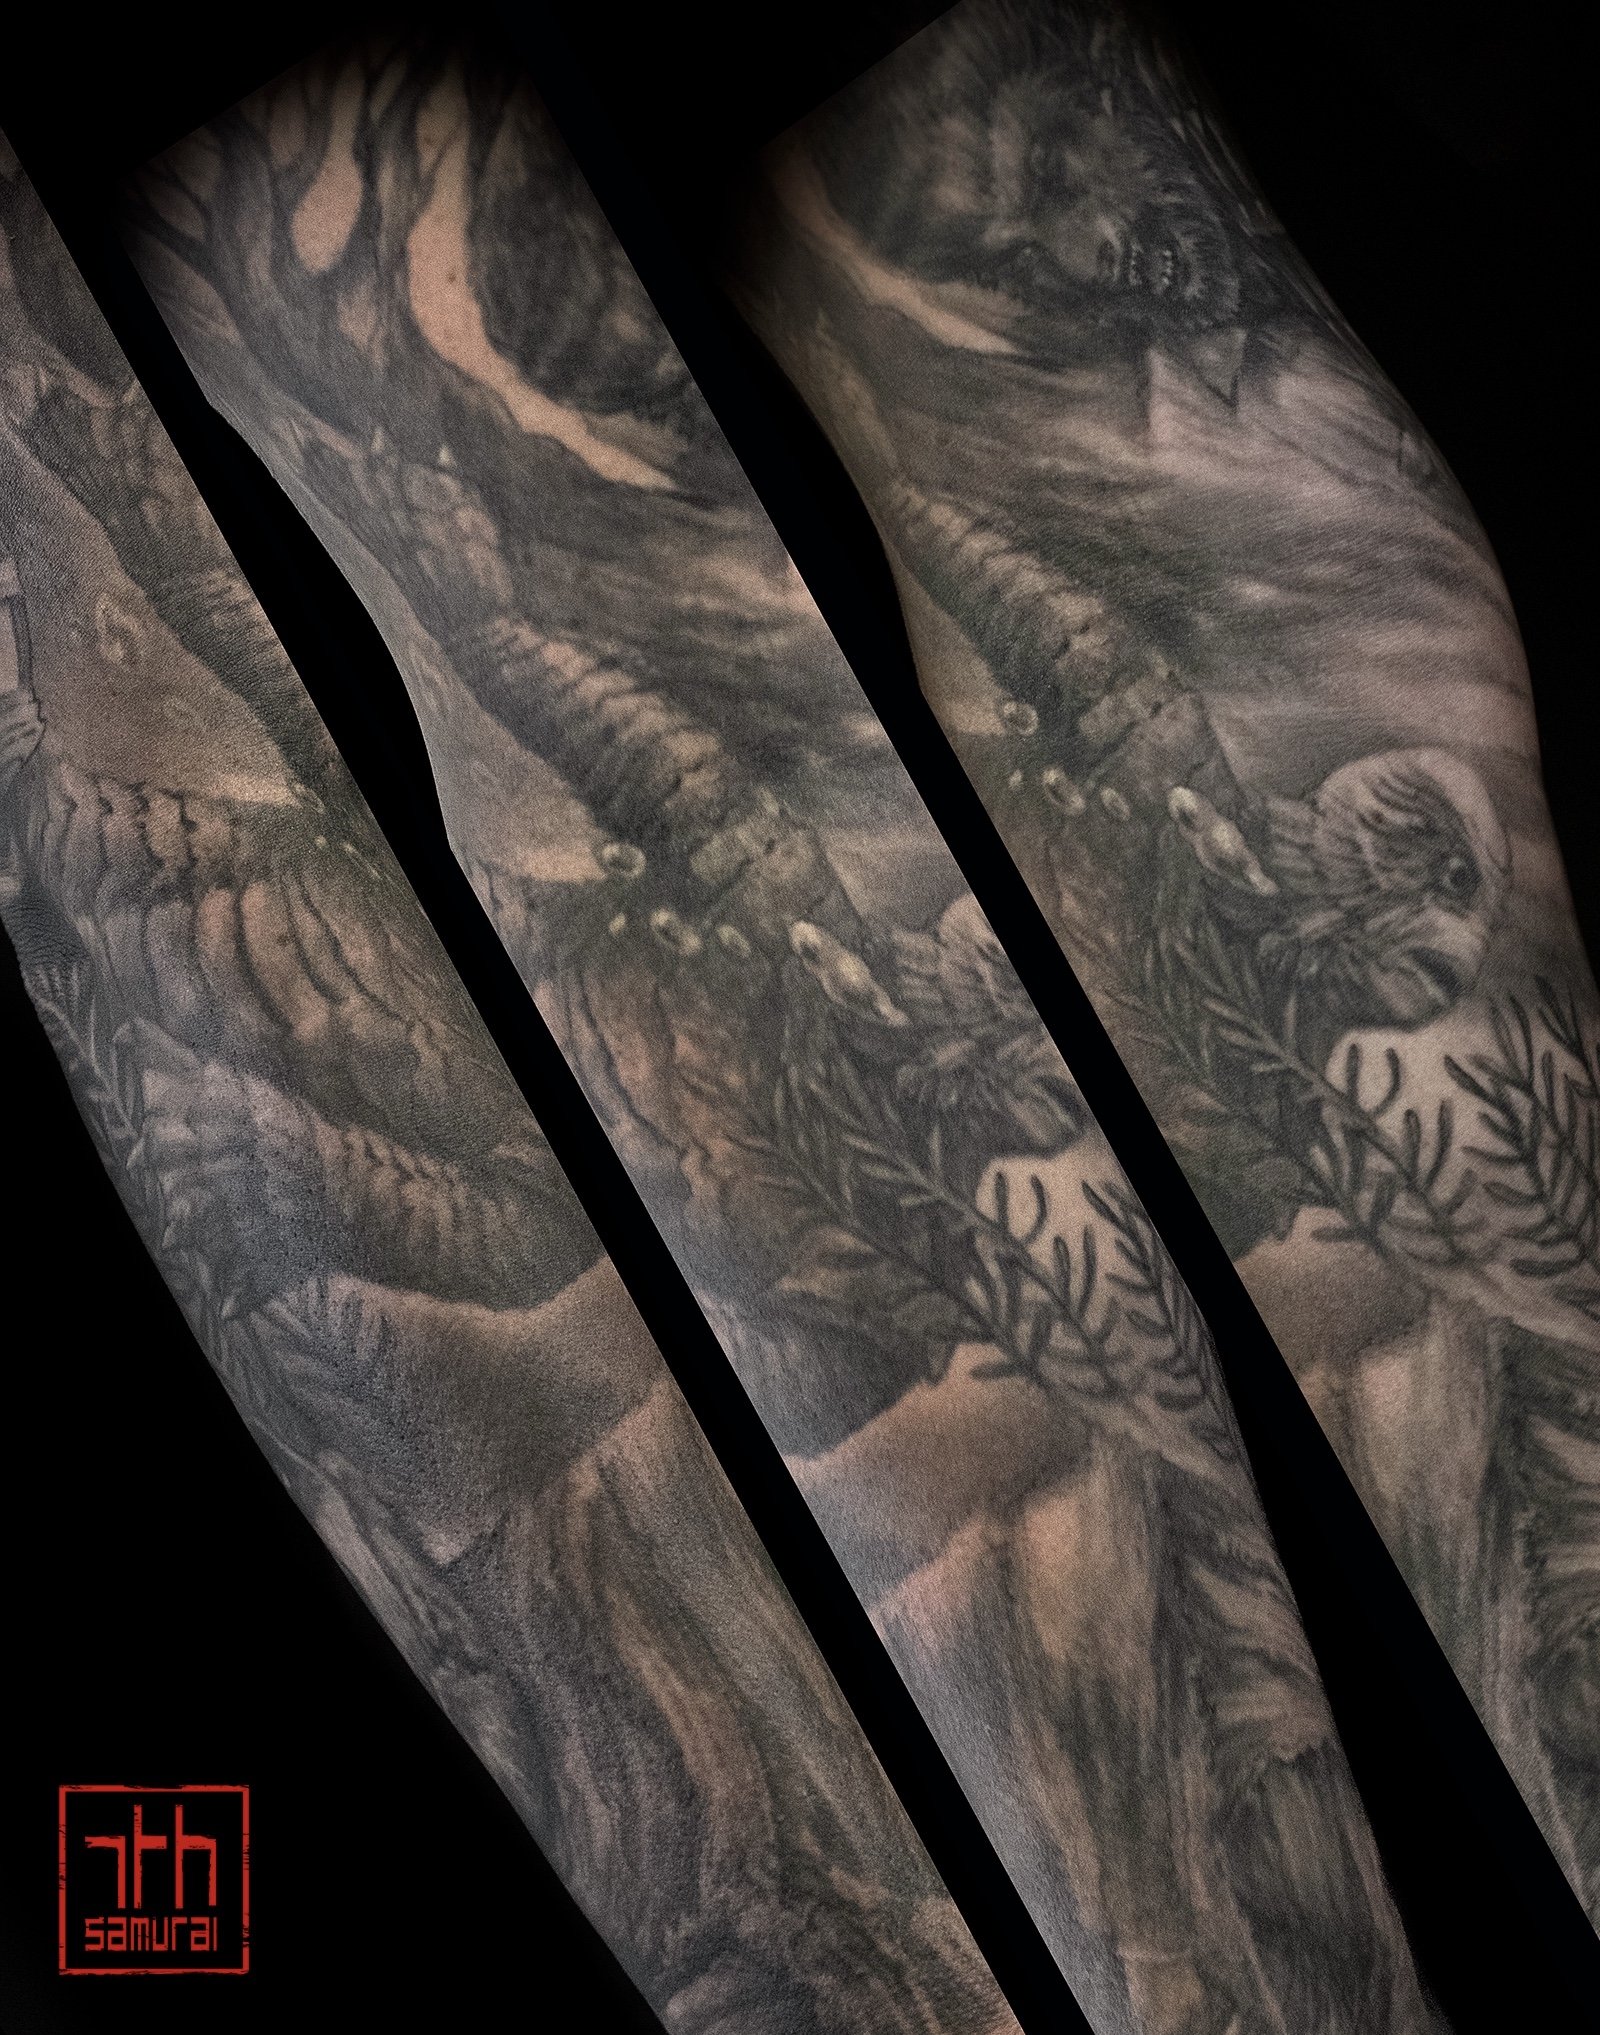 universal monsters Womens movie horror realism sleeve Mummy Boris Karloff  Creature black lagoon  Paris after midnight  Wolfman Tattoo artist Kai at 7th Samurai. YEG Edmonton, Alberta, Canada 2020